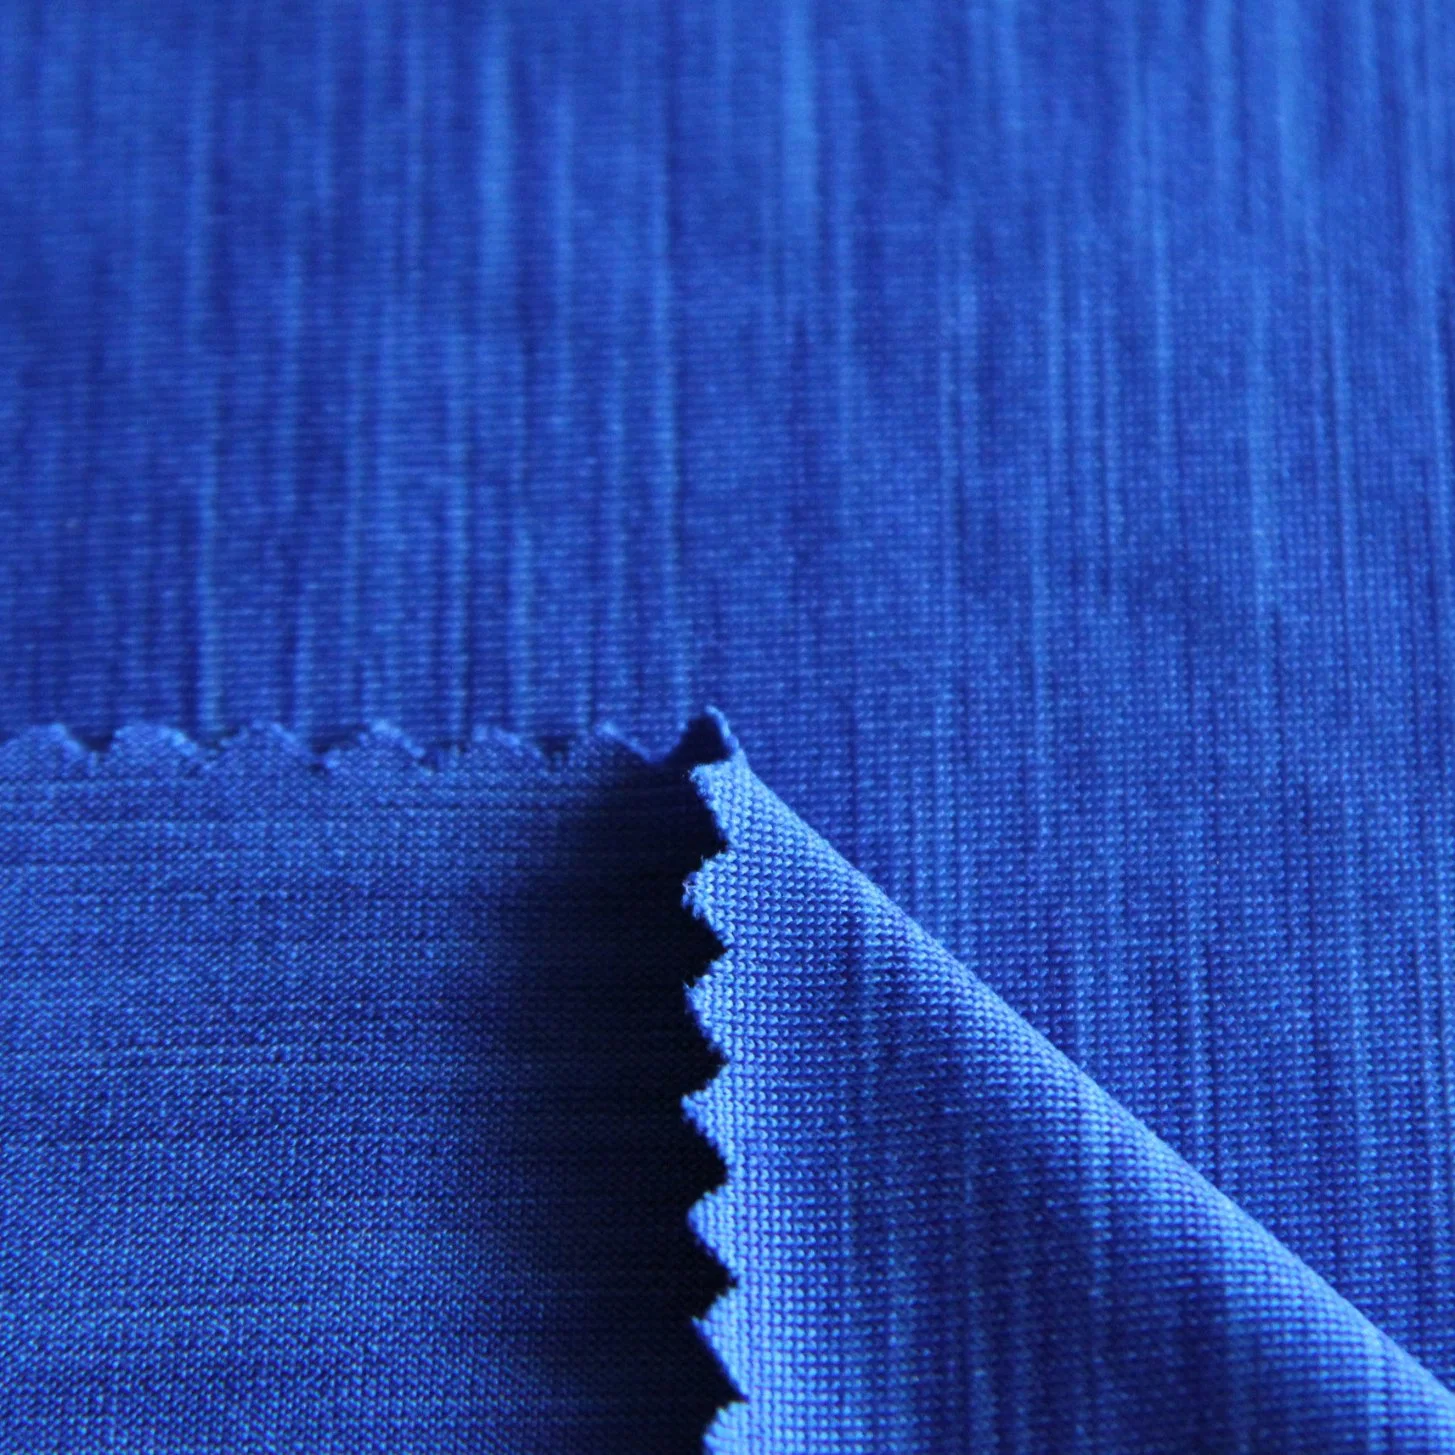 Space Dye Polyester Yarn with Spandex Knit Blue Melange Single Jersey Fabric for Top/Sportswear